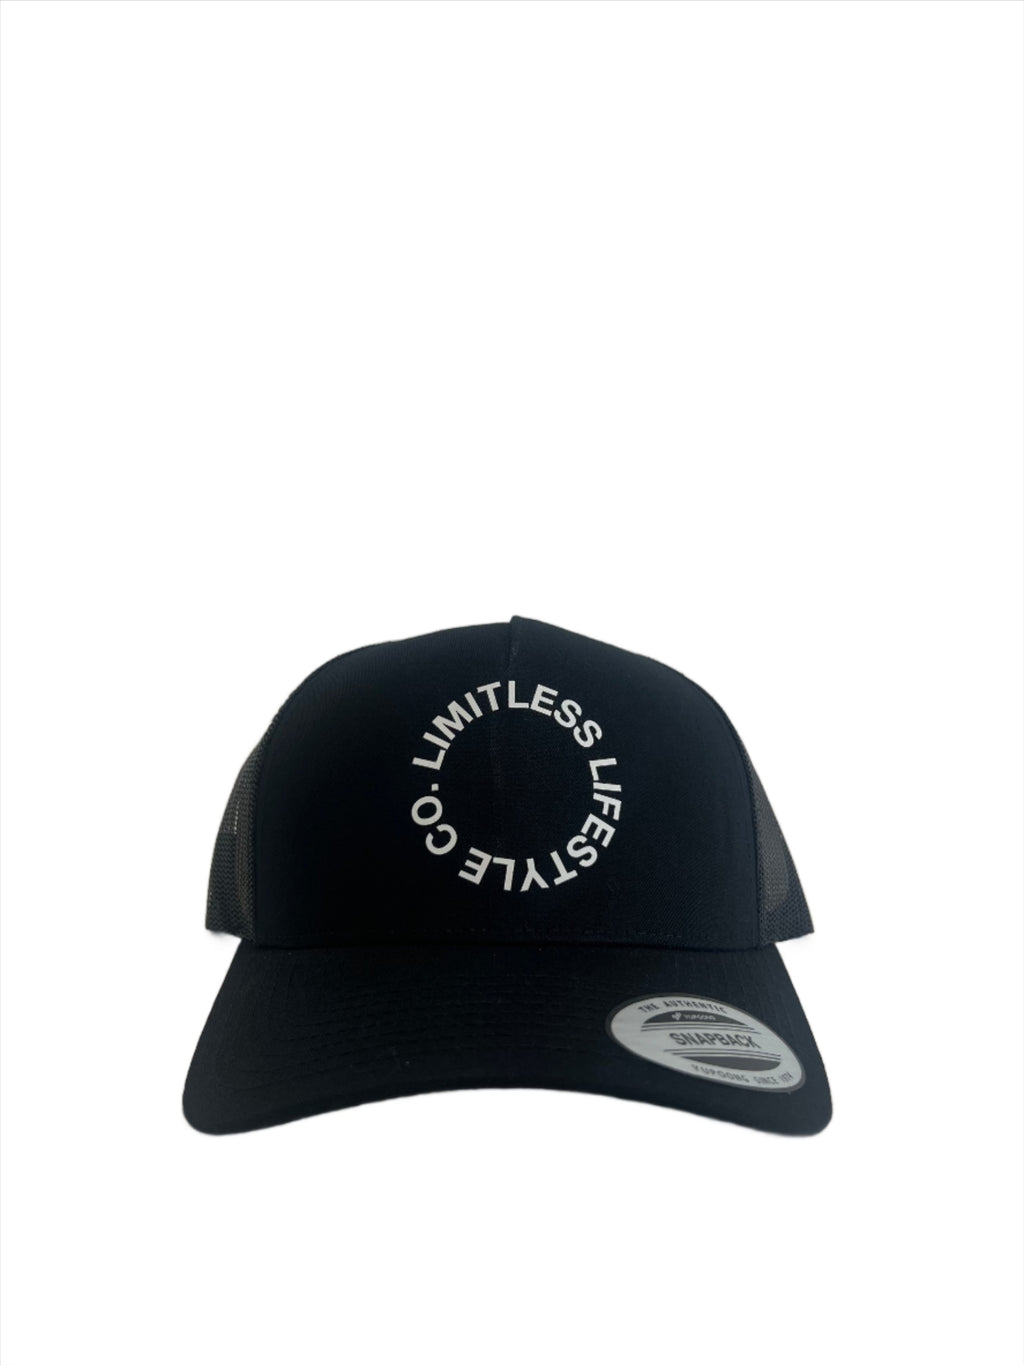 Limitless "Circle Logo" Trucker Hat (Black)